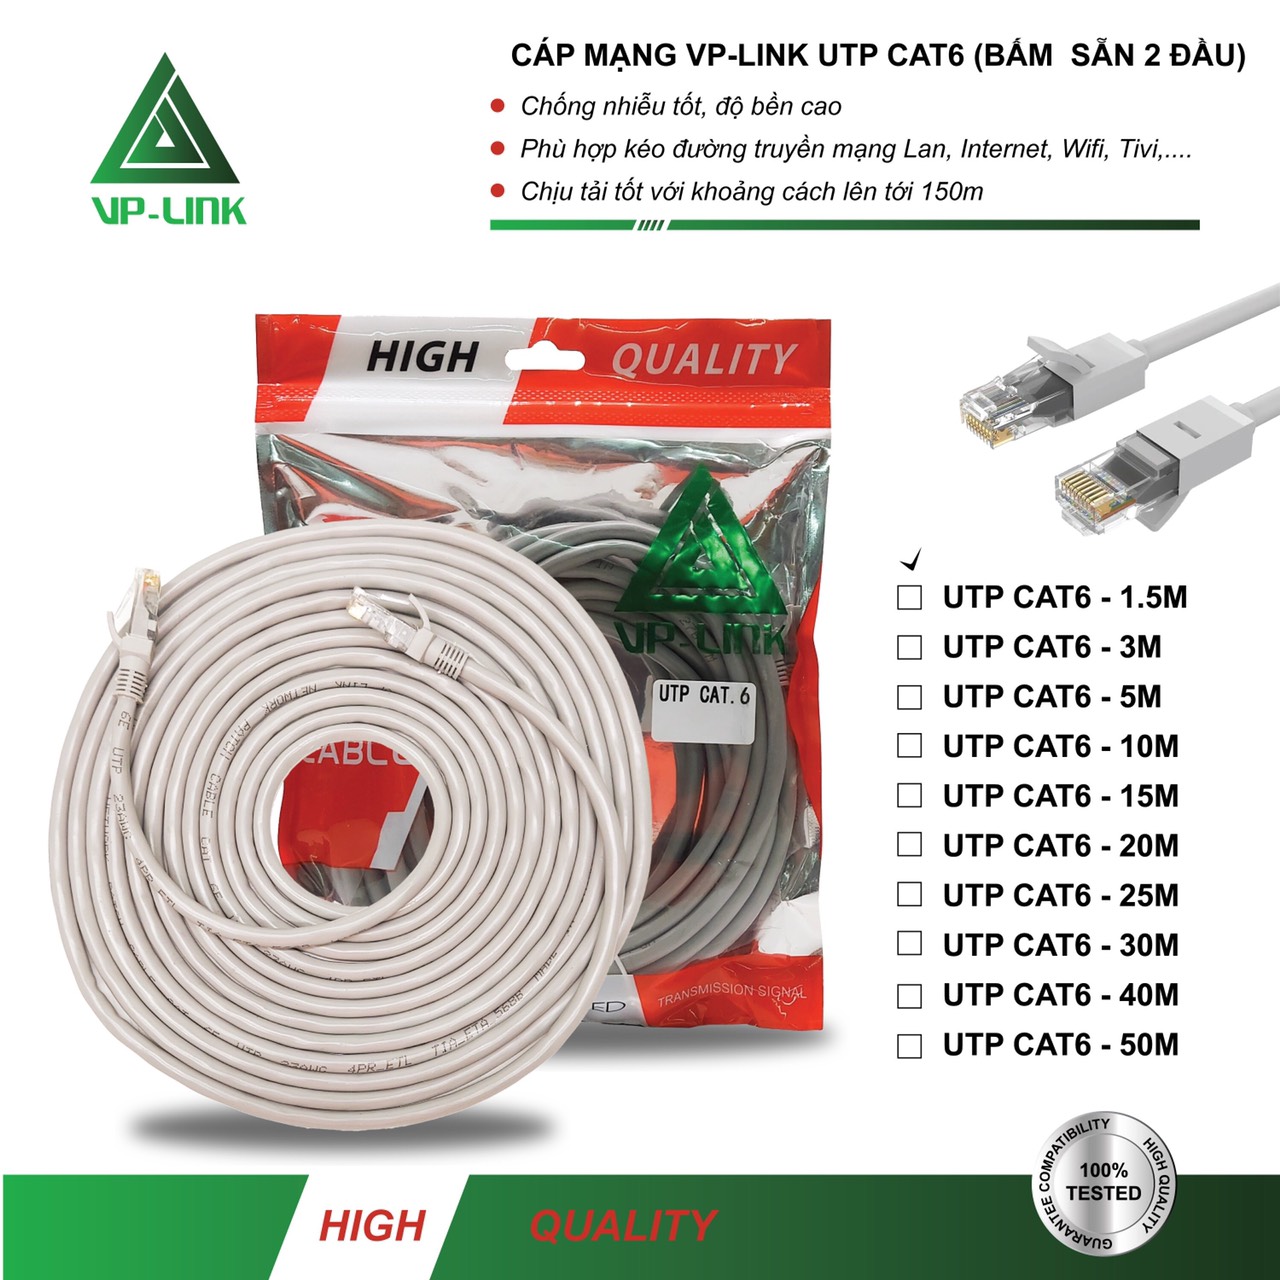 Cable LAN VP-LINK UTP CAT6 5m Bấm sẵn 2 đầu